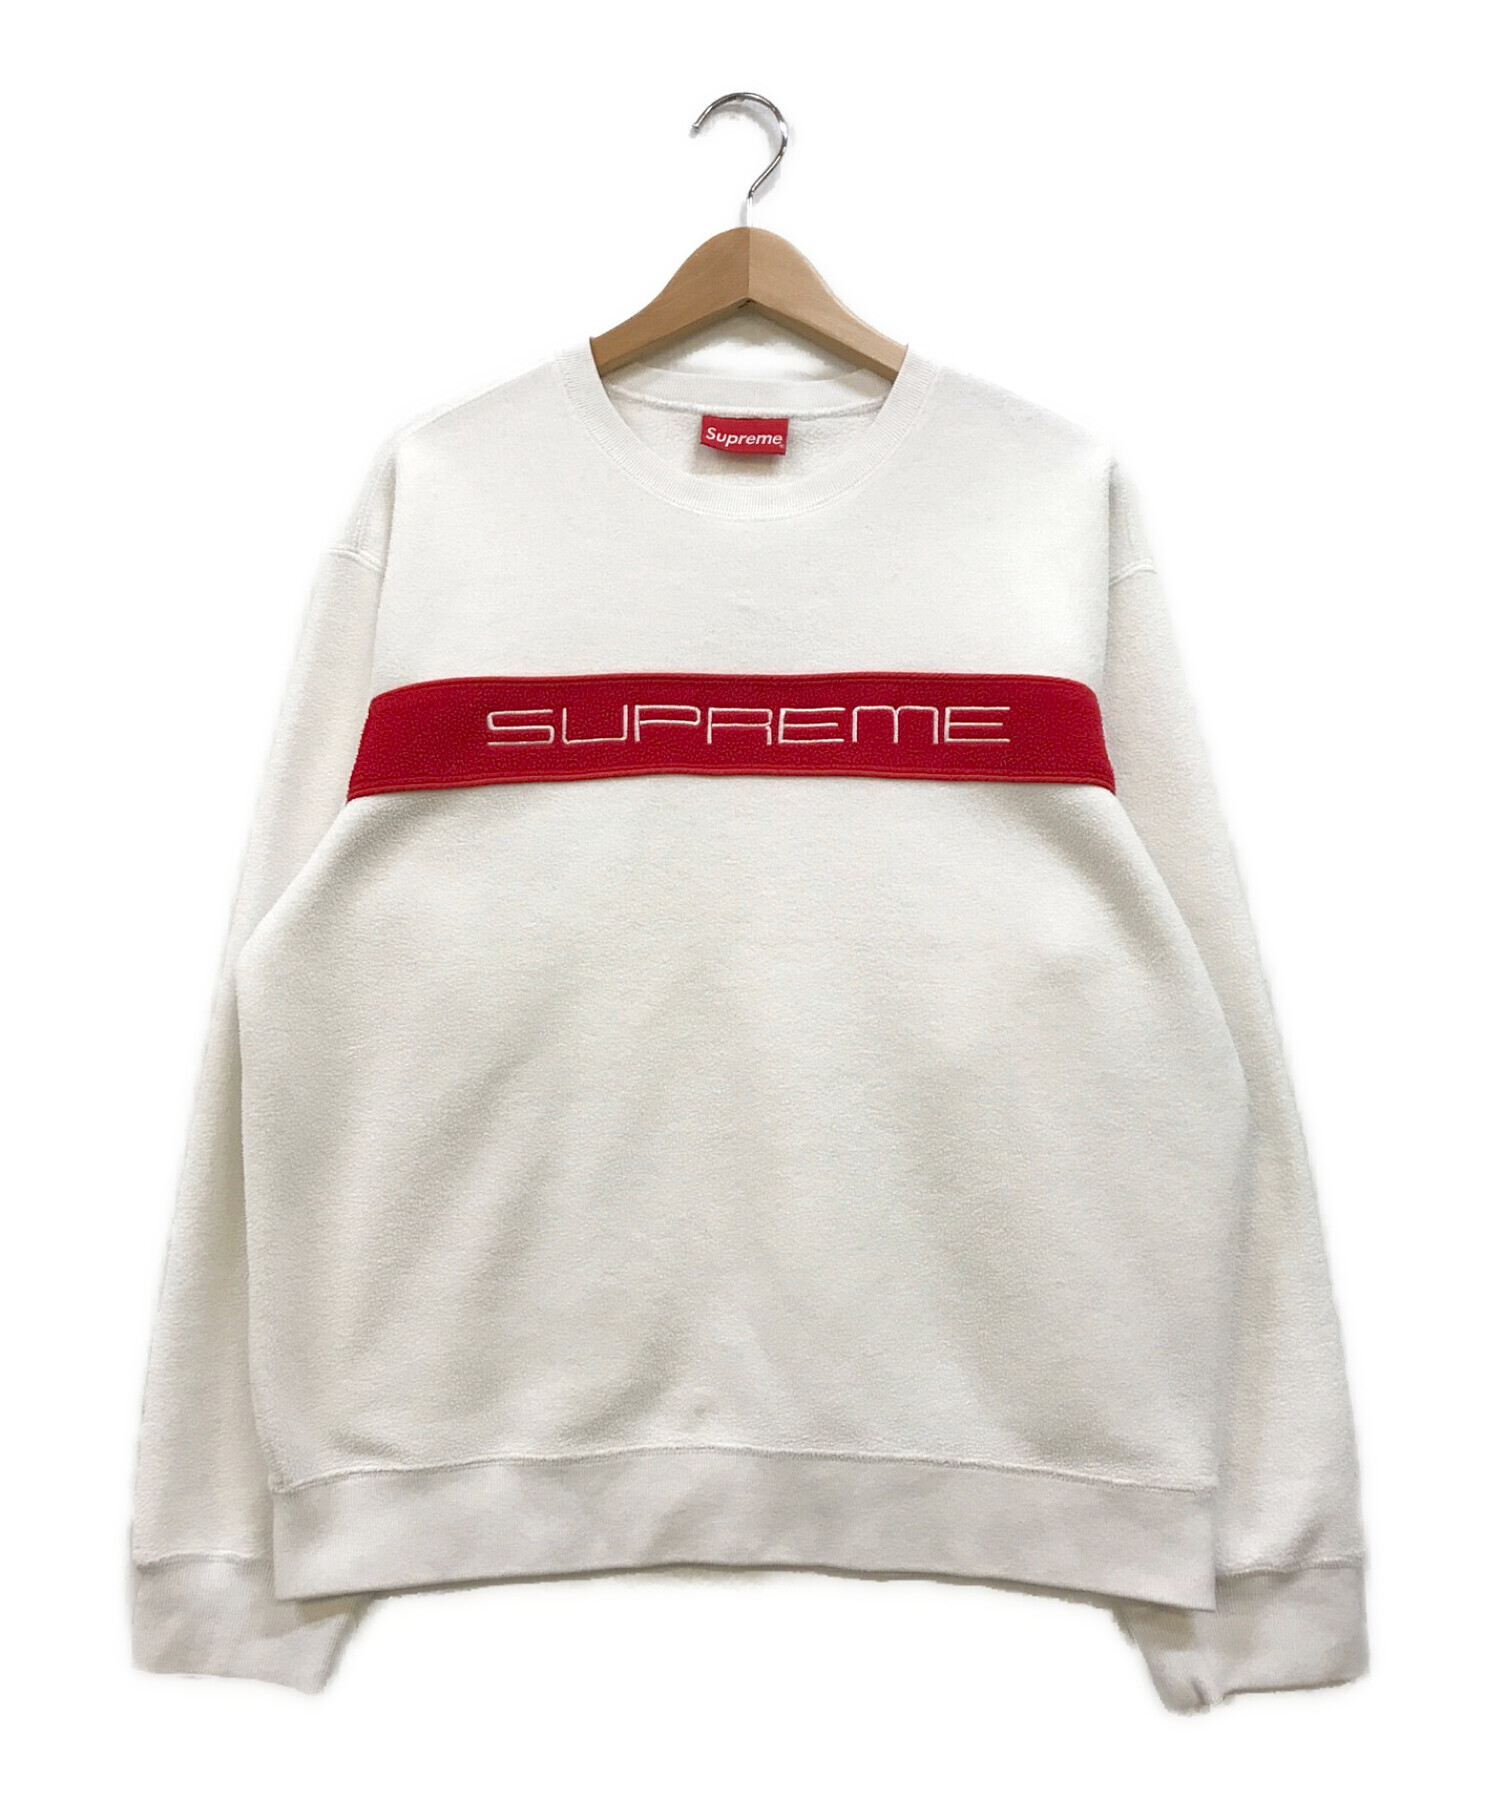 Supreme Polartec Sweatshirt M size